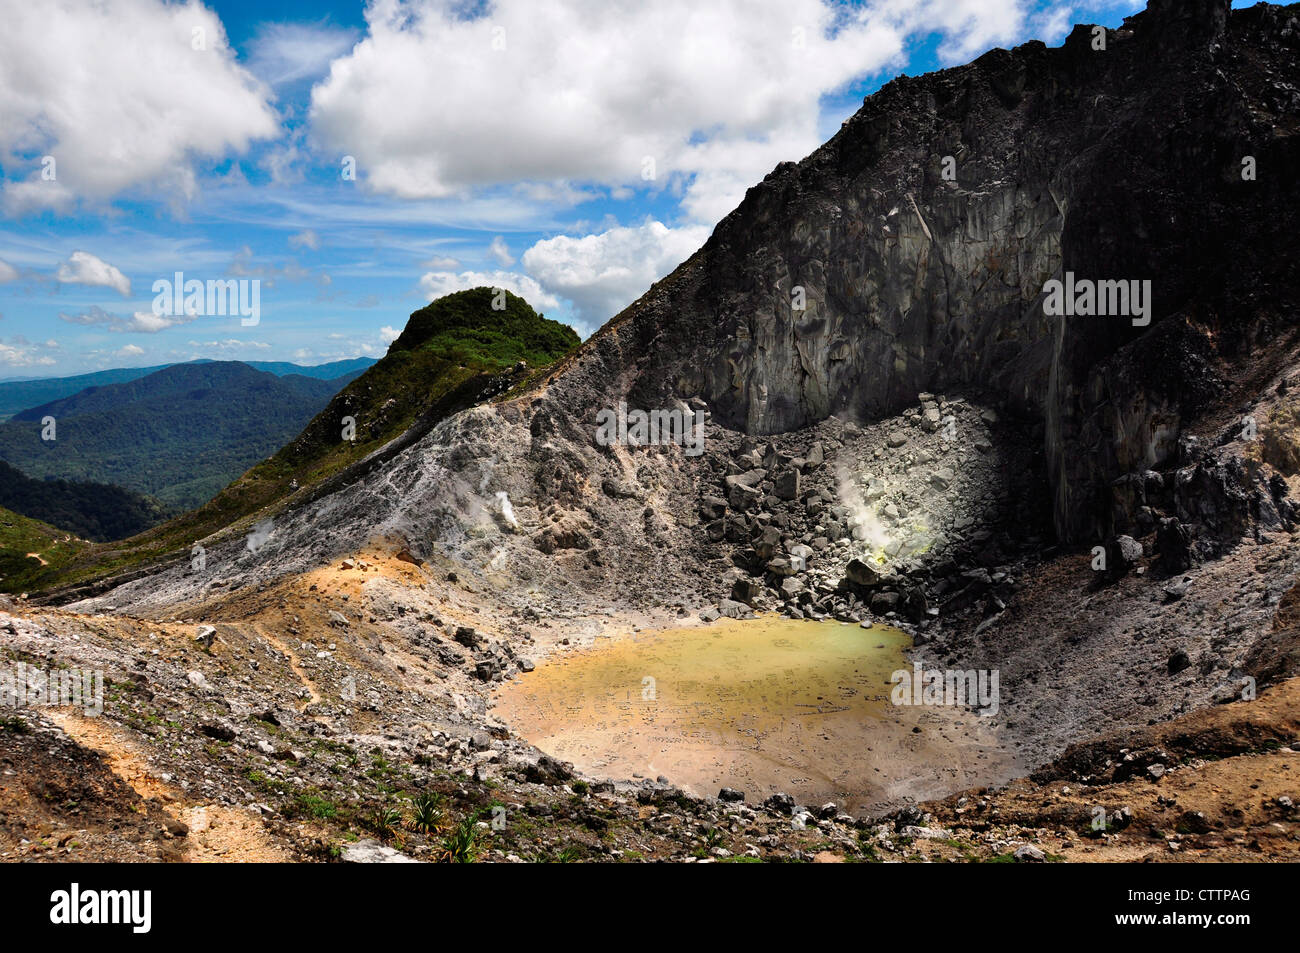 the crater of Gunung Sibayak volcanoe in North Sumatera Indonesia Stock Photo